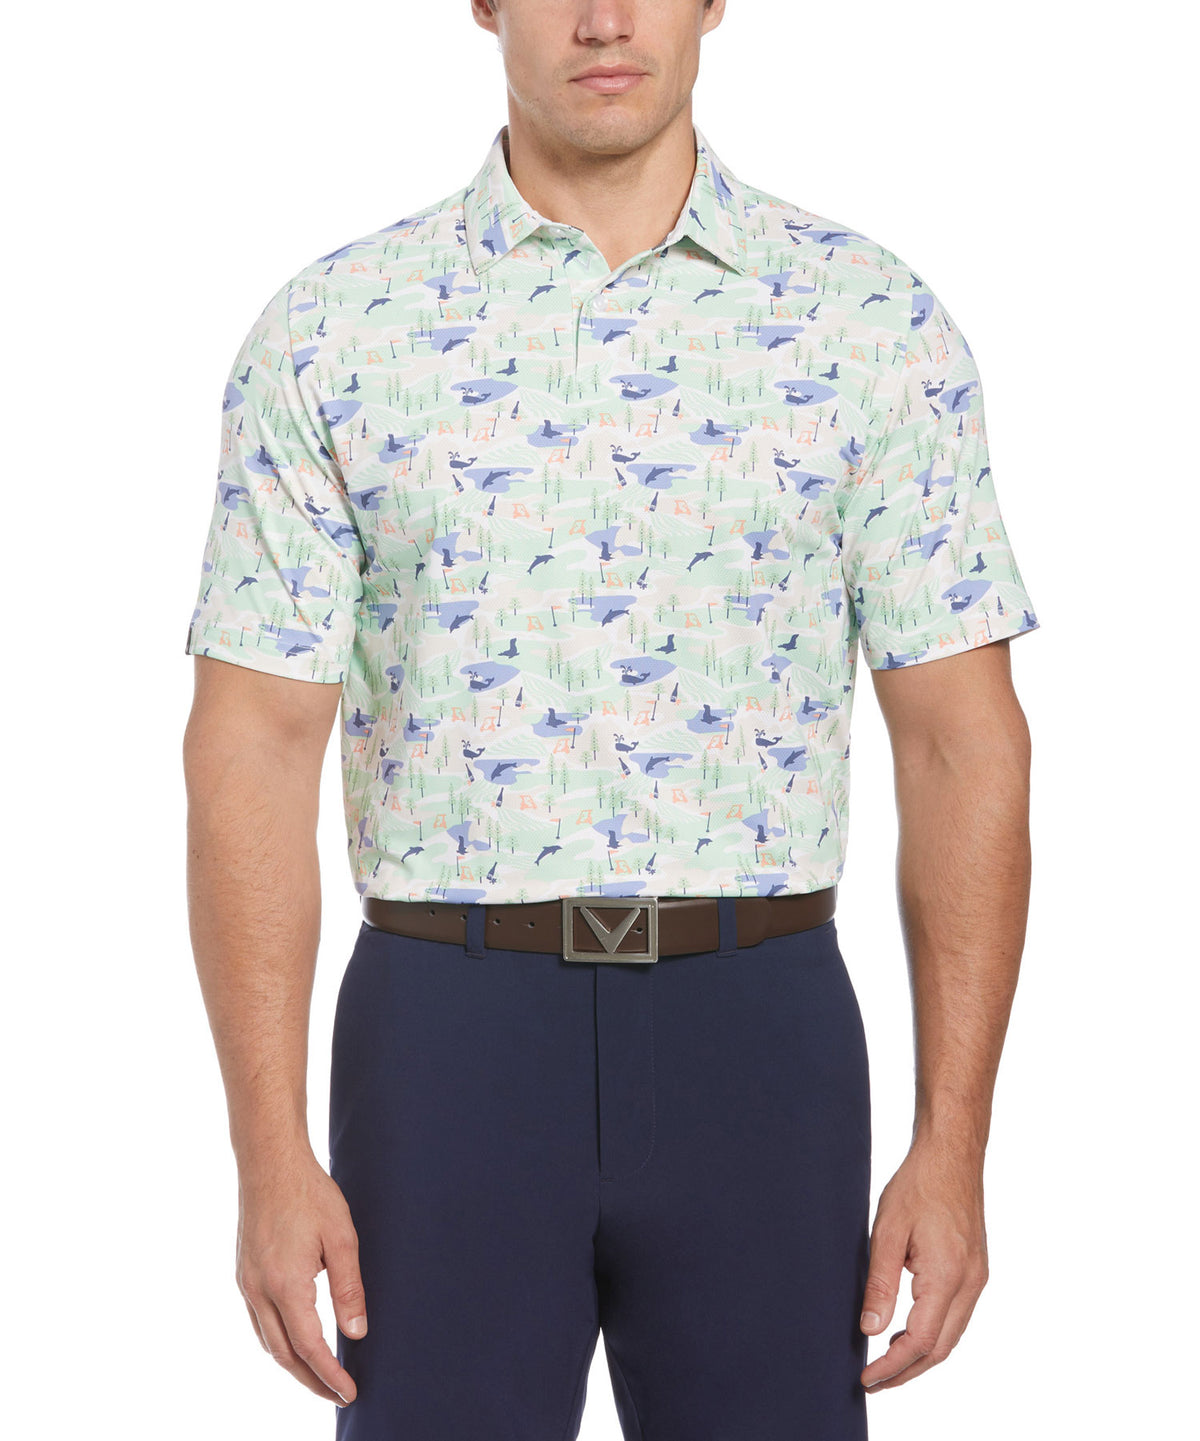 Callaway Short Sleeve Coastal Print Polo Knit Shirt, Big & Tall